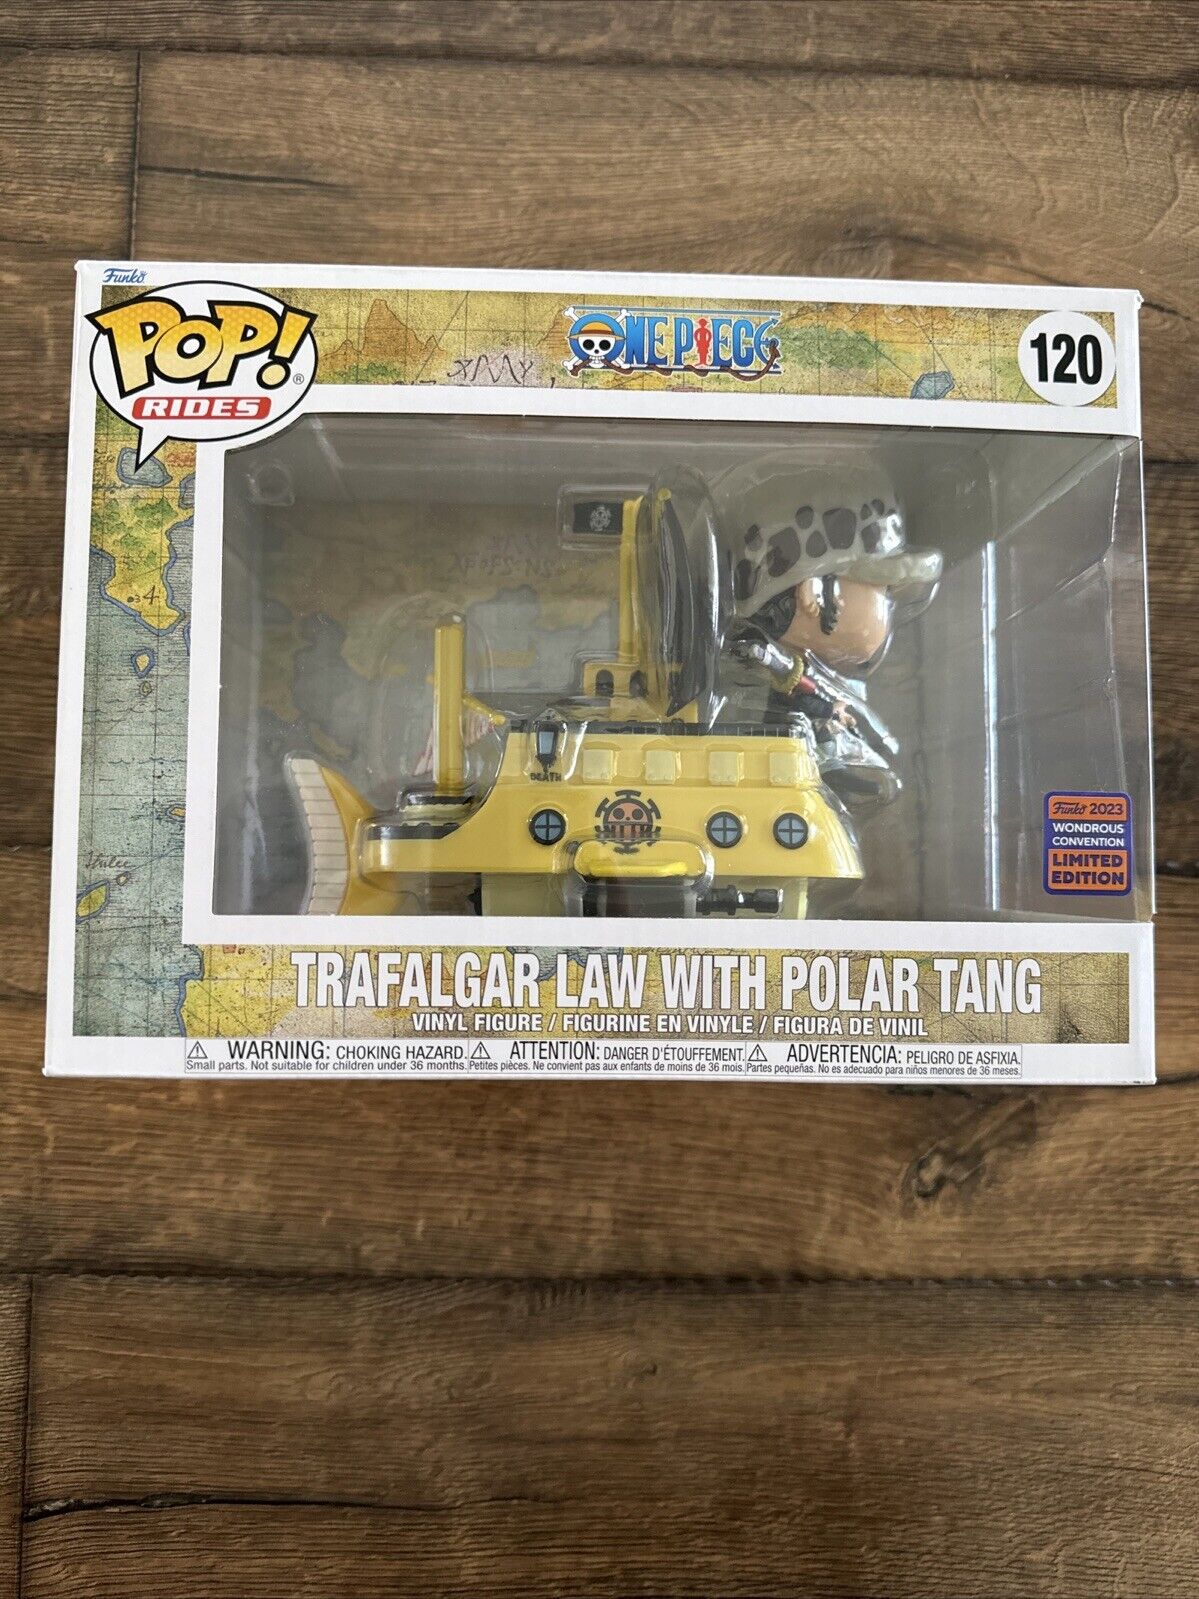 Funko Pop One Piece Trafalgar Law with Polar Tang #120 Shared Wonder Con